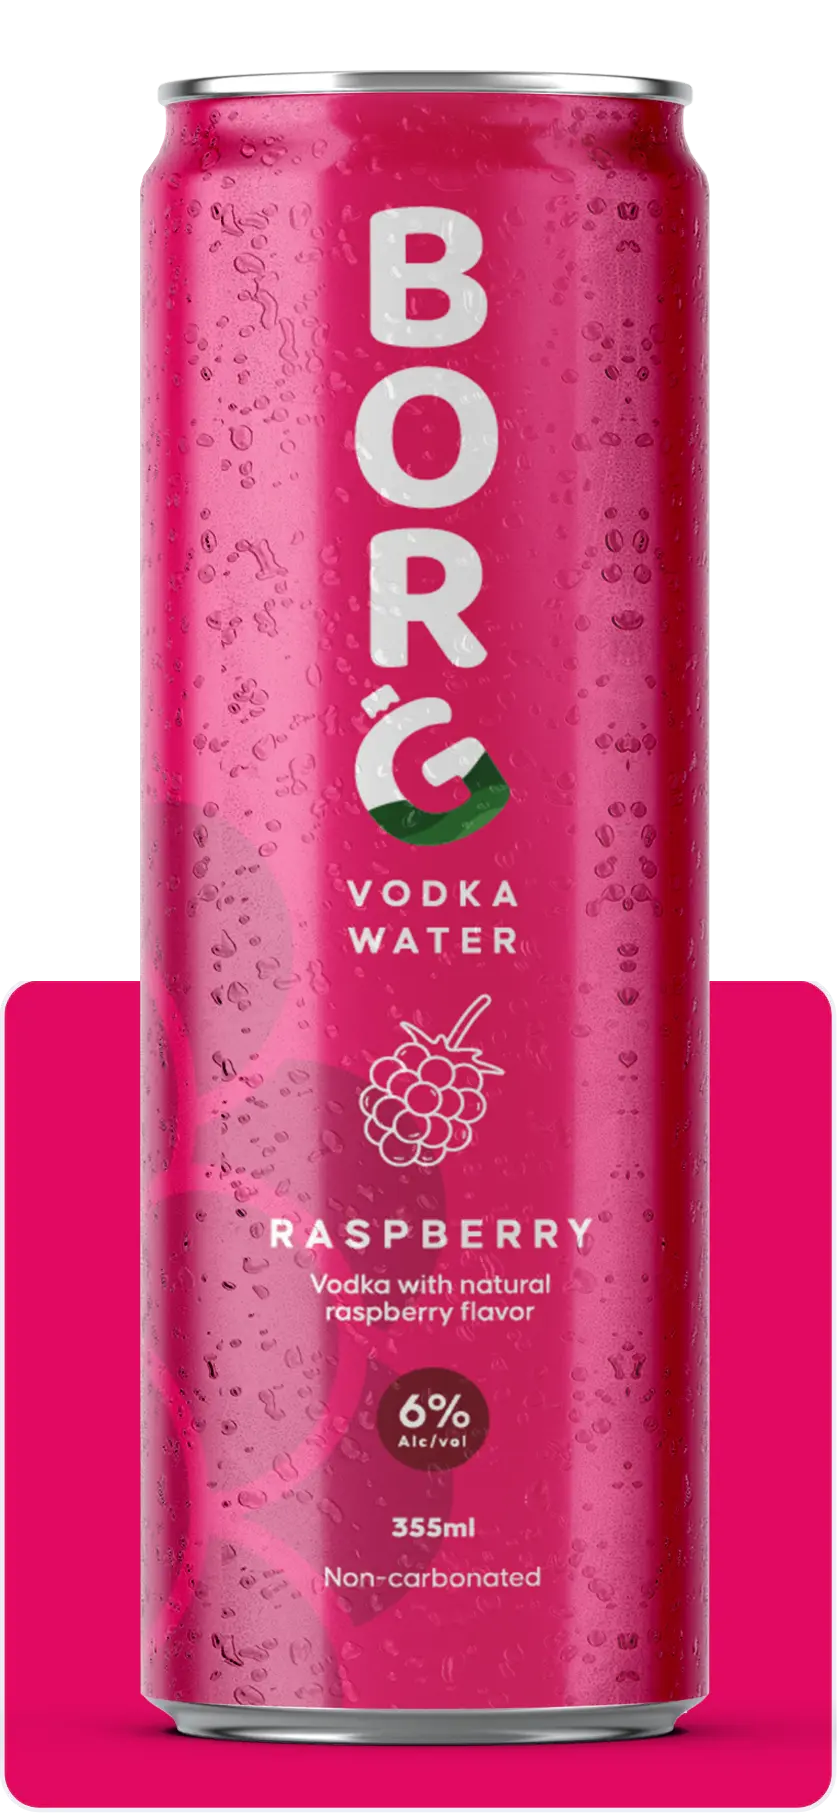 BORG Bodka Water - Raspberry Flavor